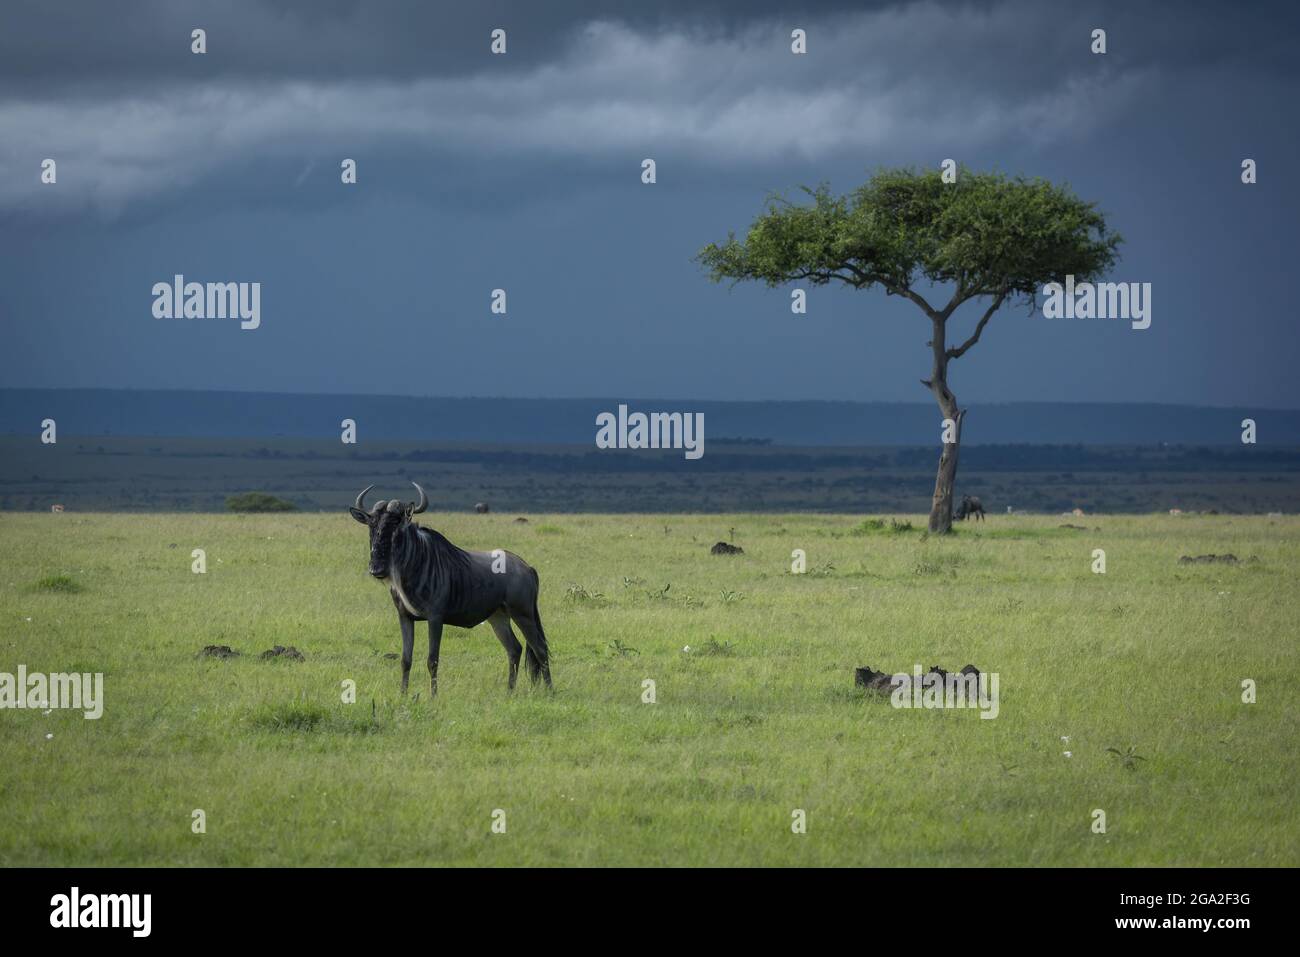 El ñus azul (Connochaetes taurinus) está cerca de la acacia durante la tormenta, la Reserva Nacional Maasai Mara; Narok, Masai Mara, Kenia Foto de stock